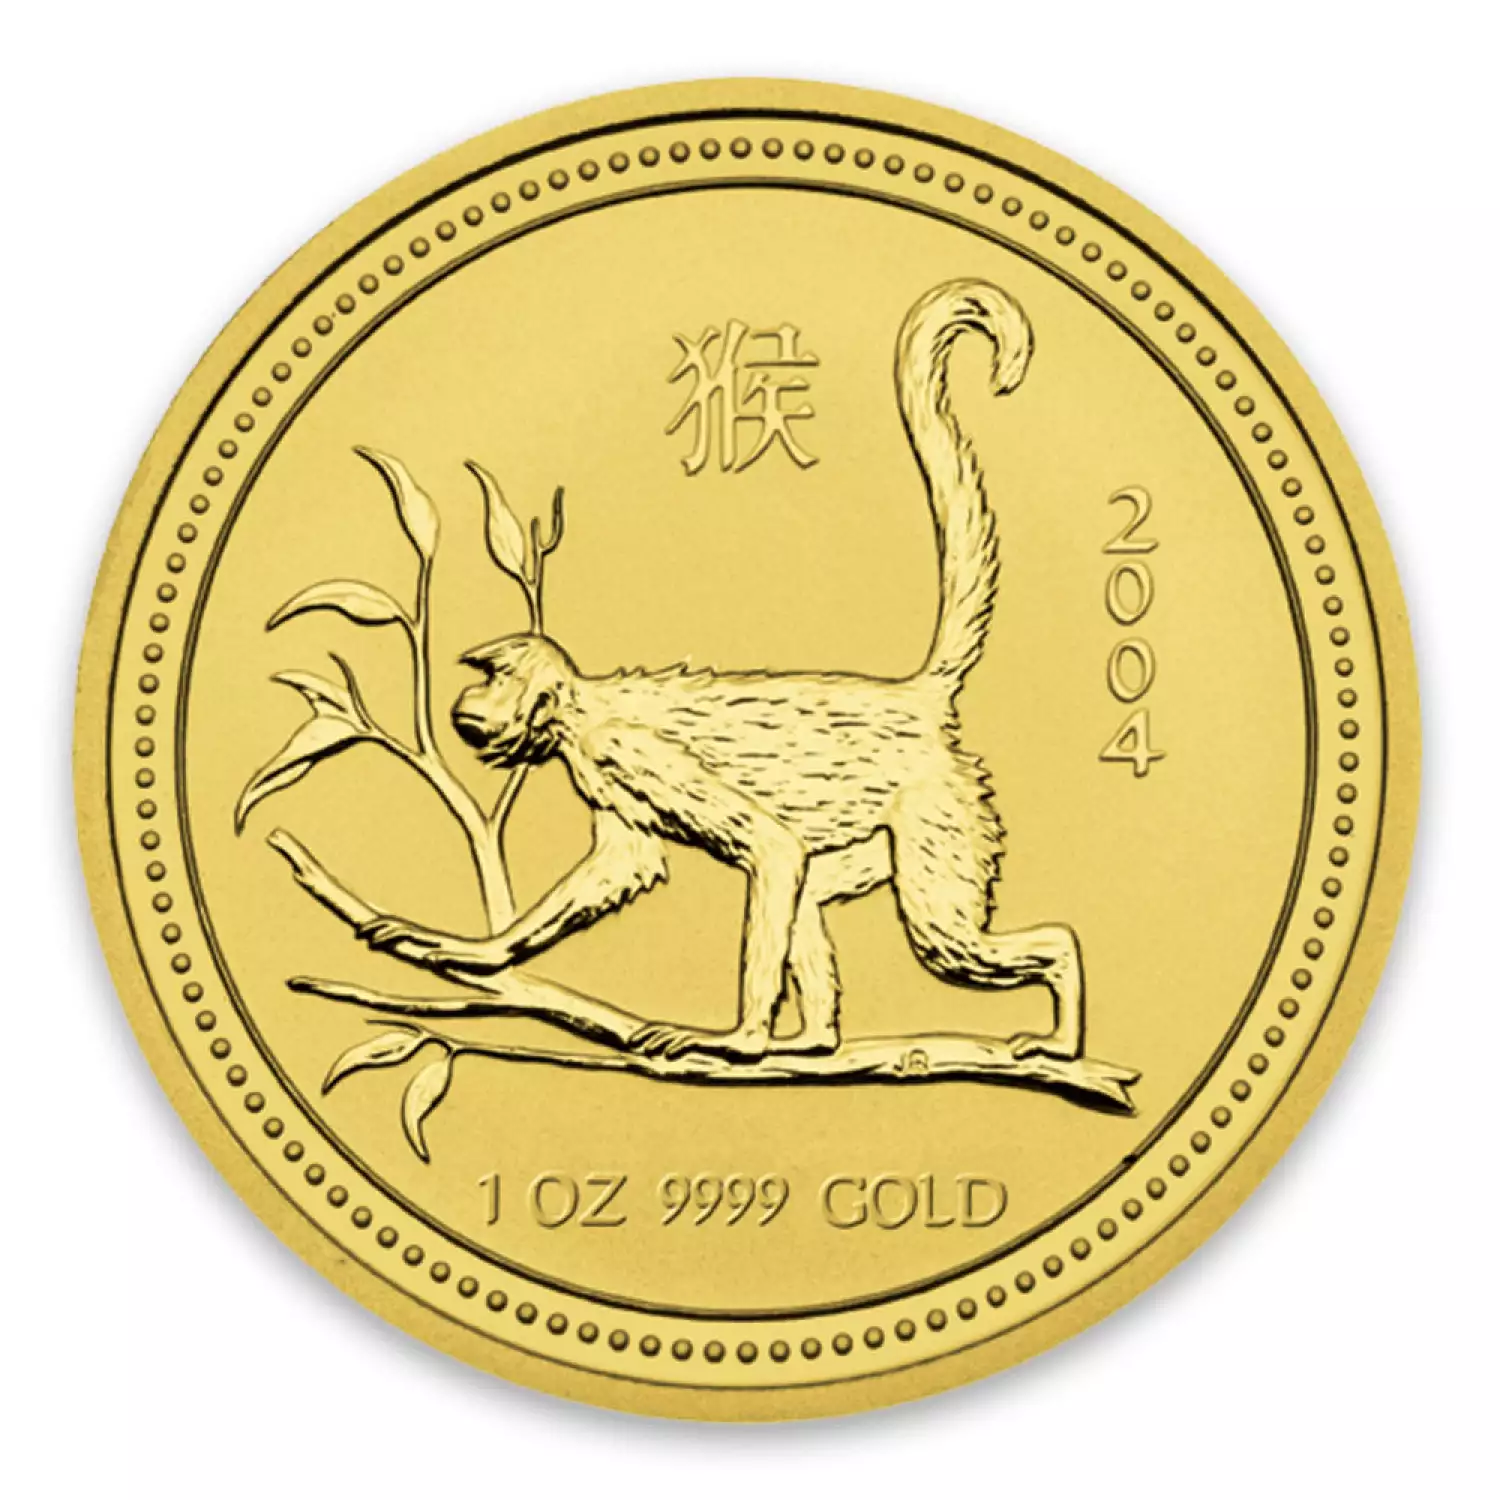 2004 1oz Australian Perth Mint Gold Lunar: Year of the Monkey (2)